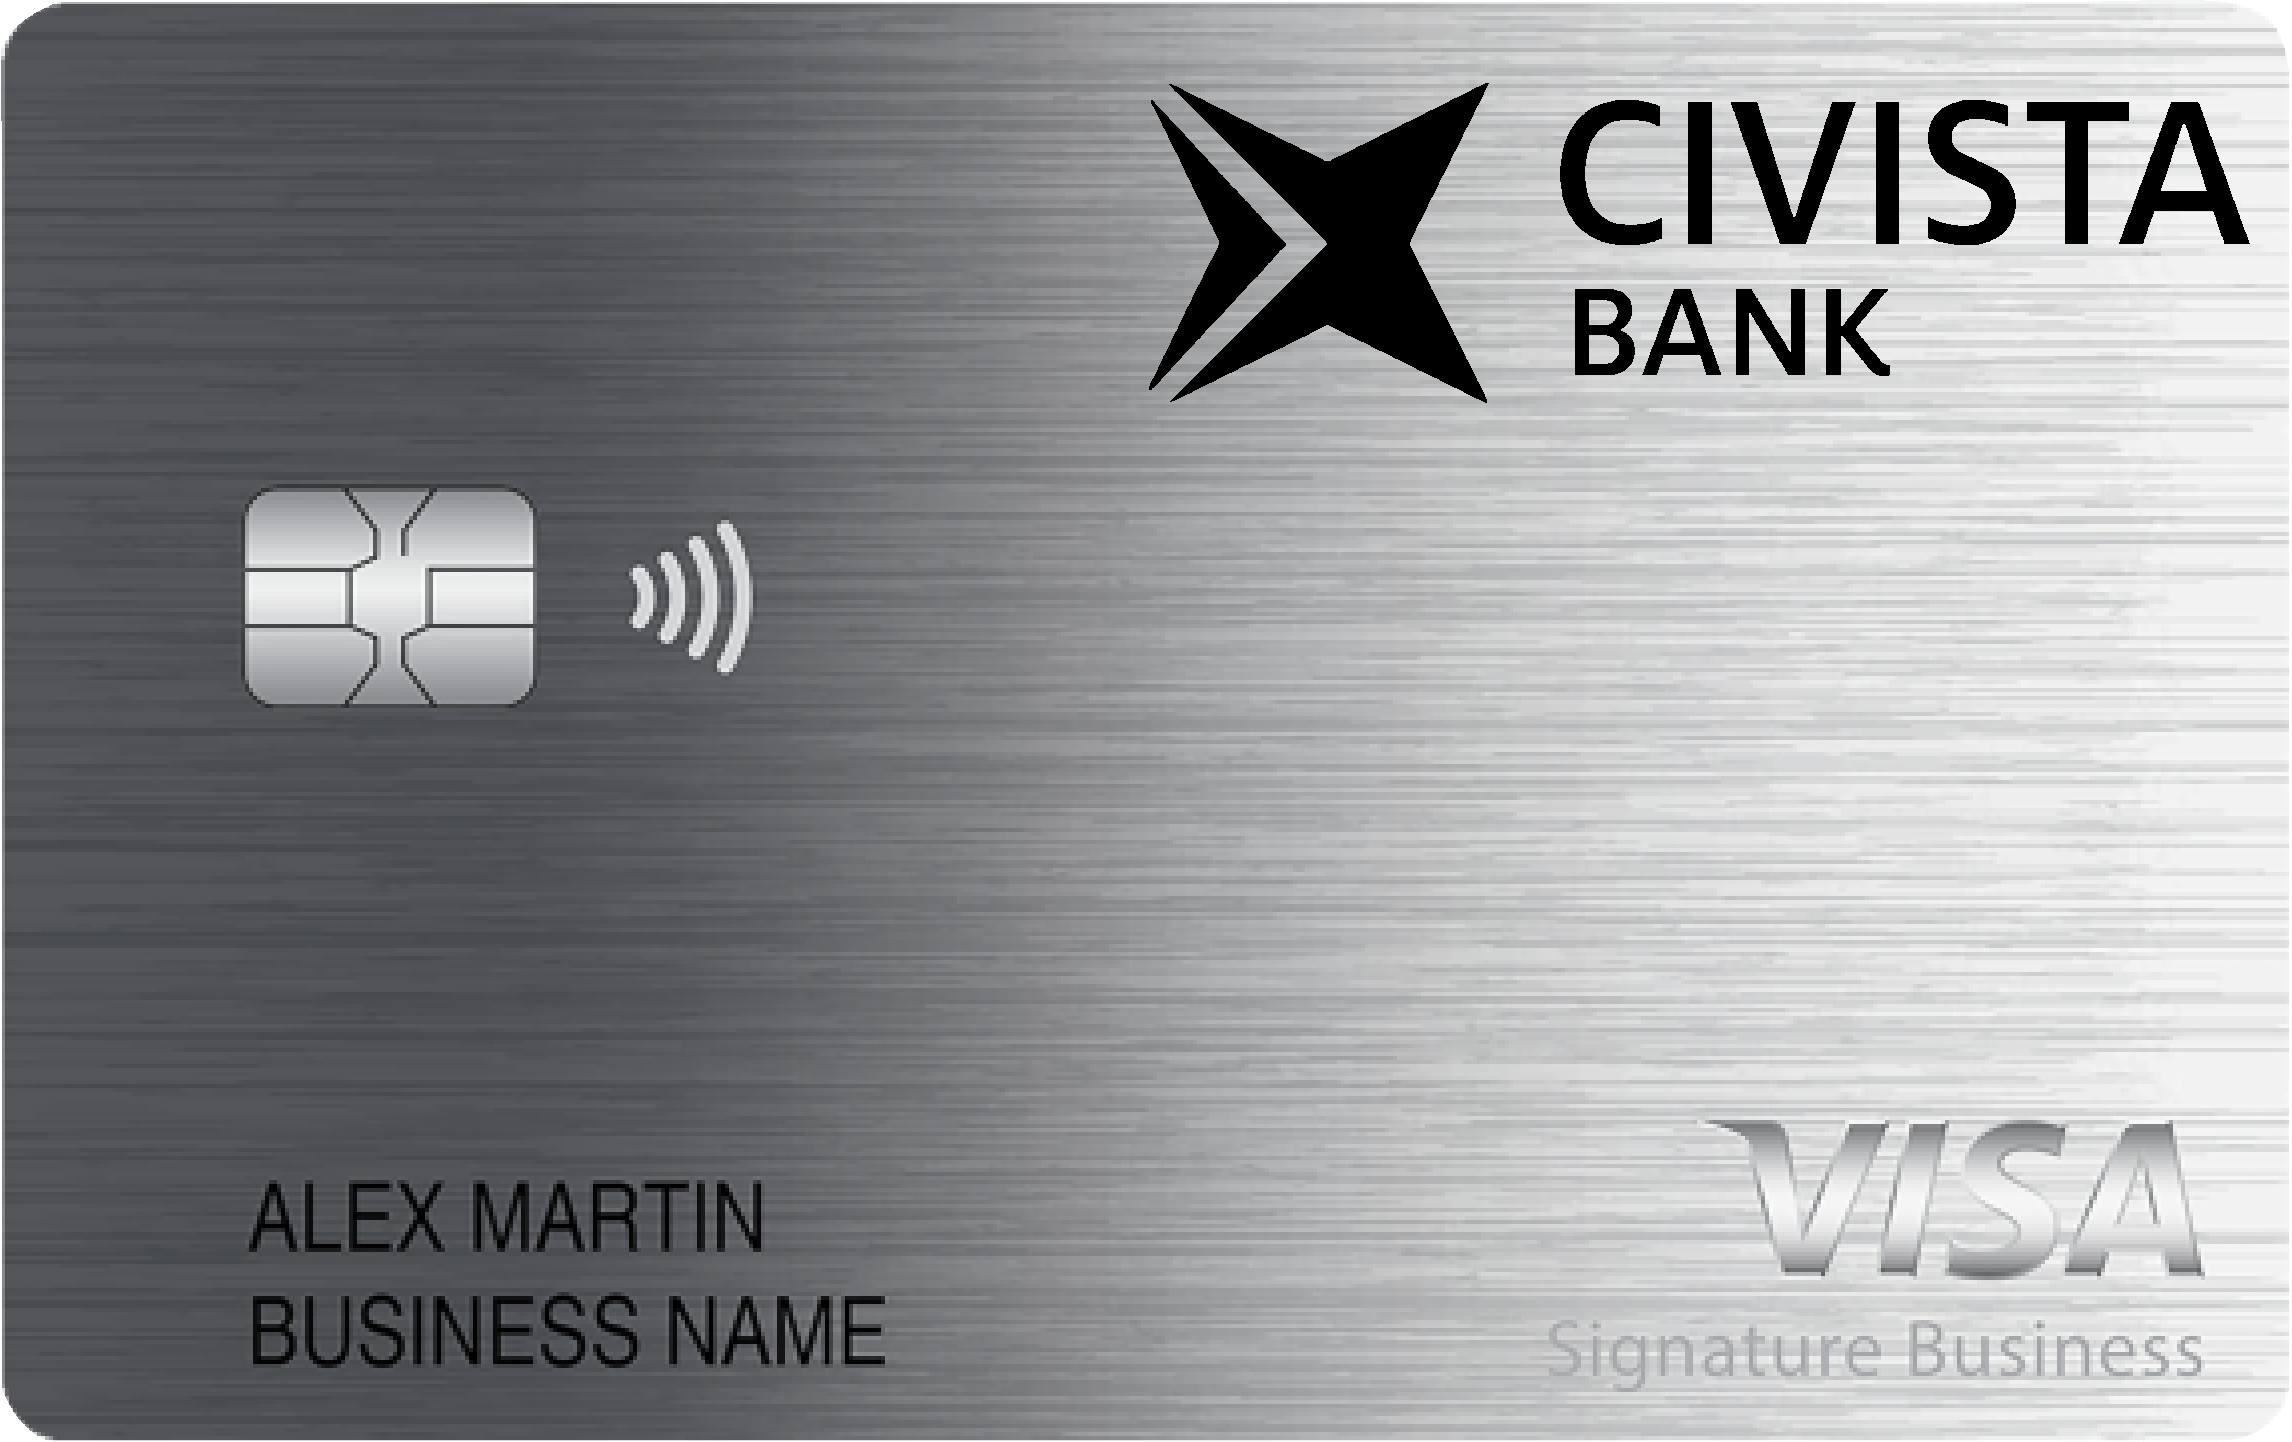 Civista Bank Smart Business Rewards Card